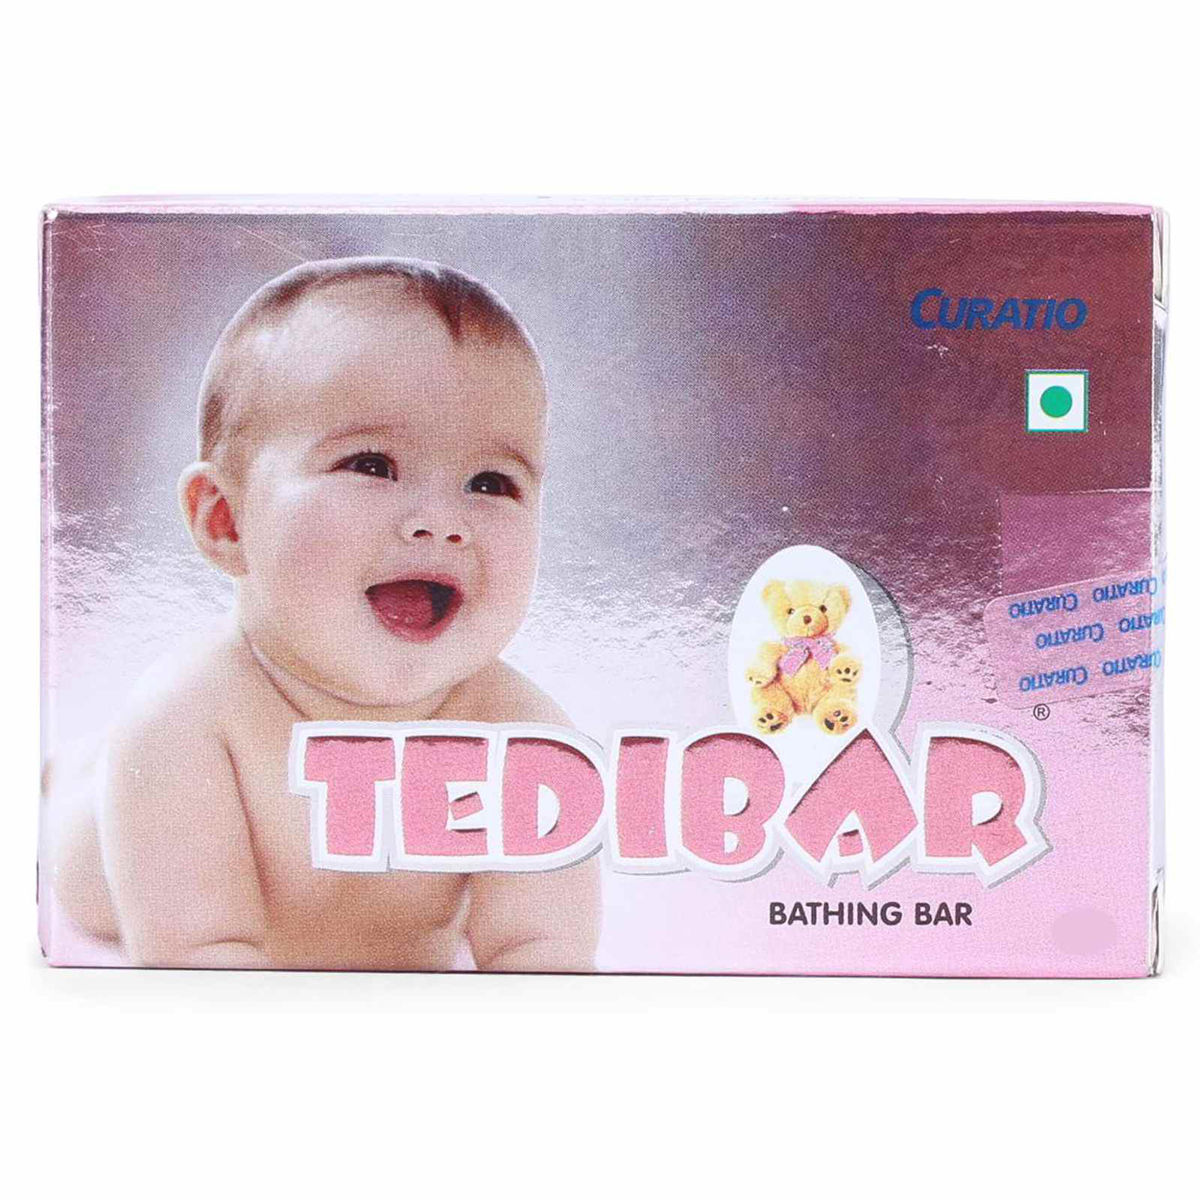 Tedibar Bathing Bar, 75 gm, Pack of 1 